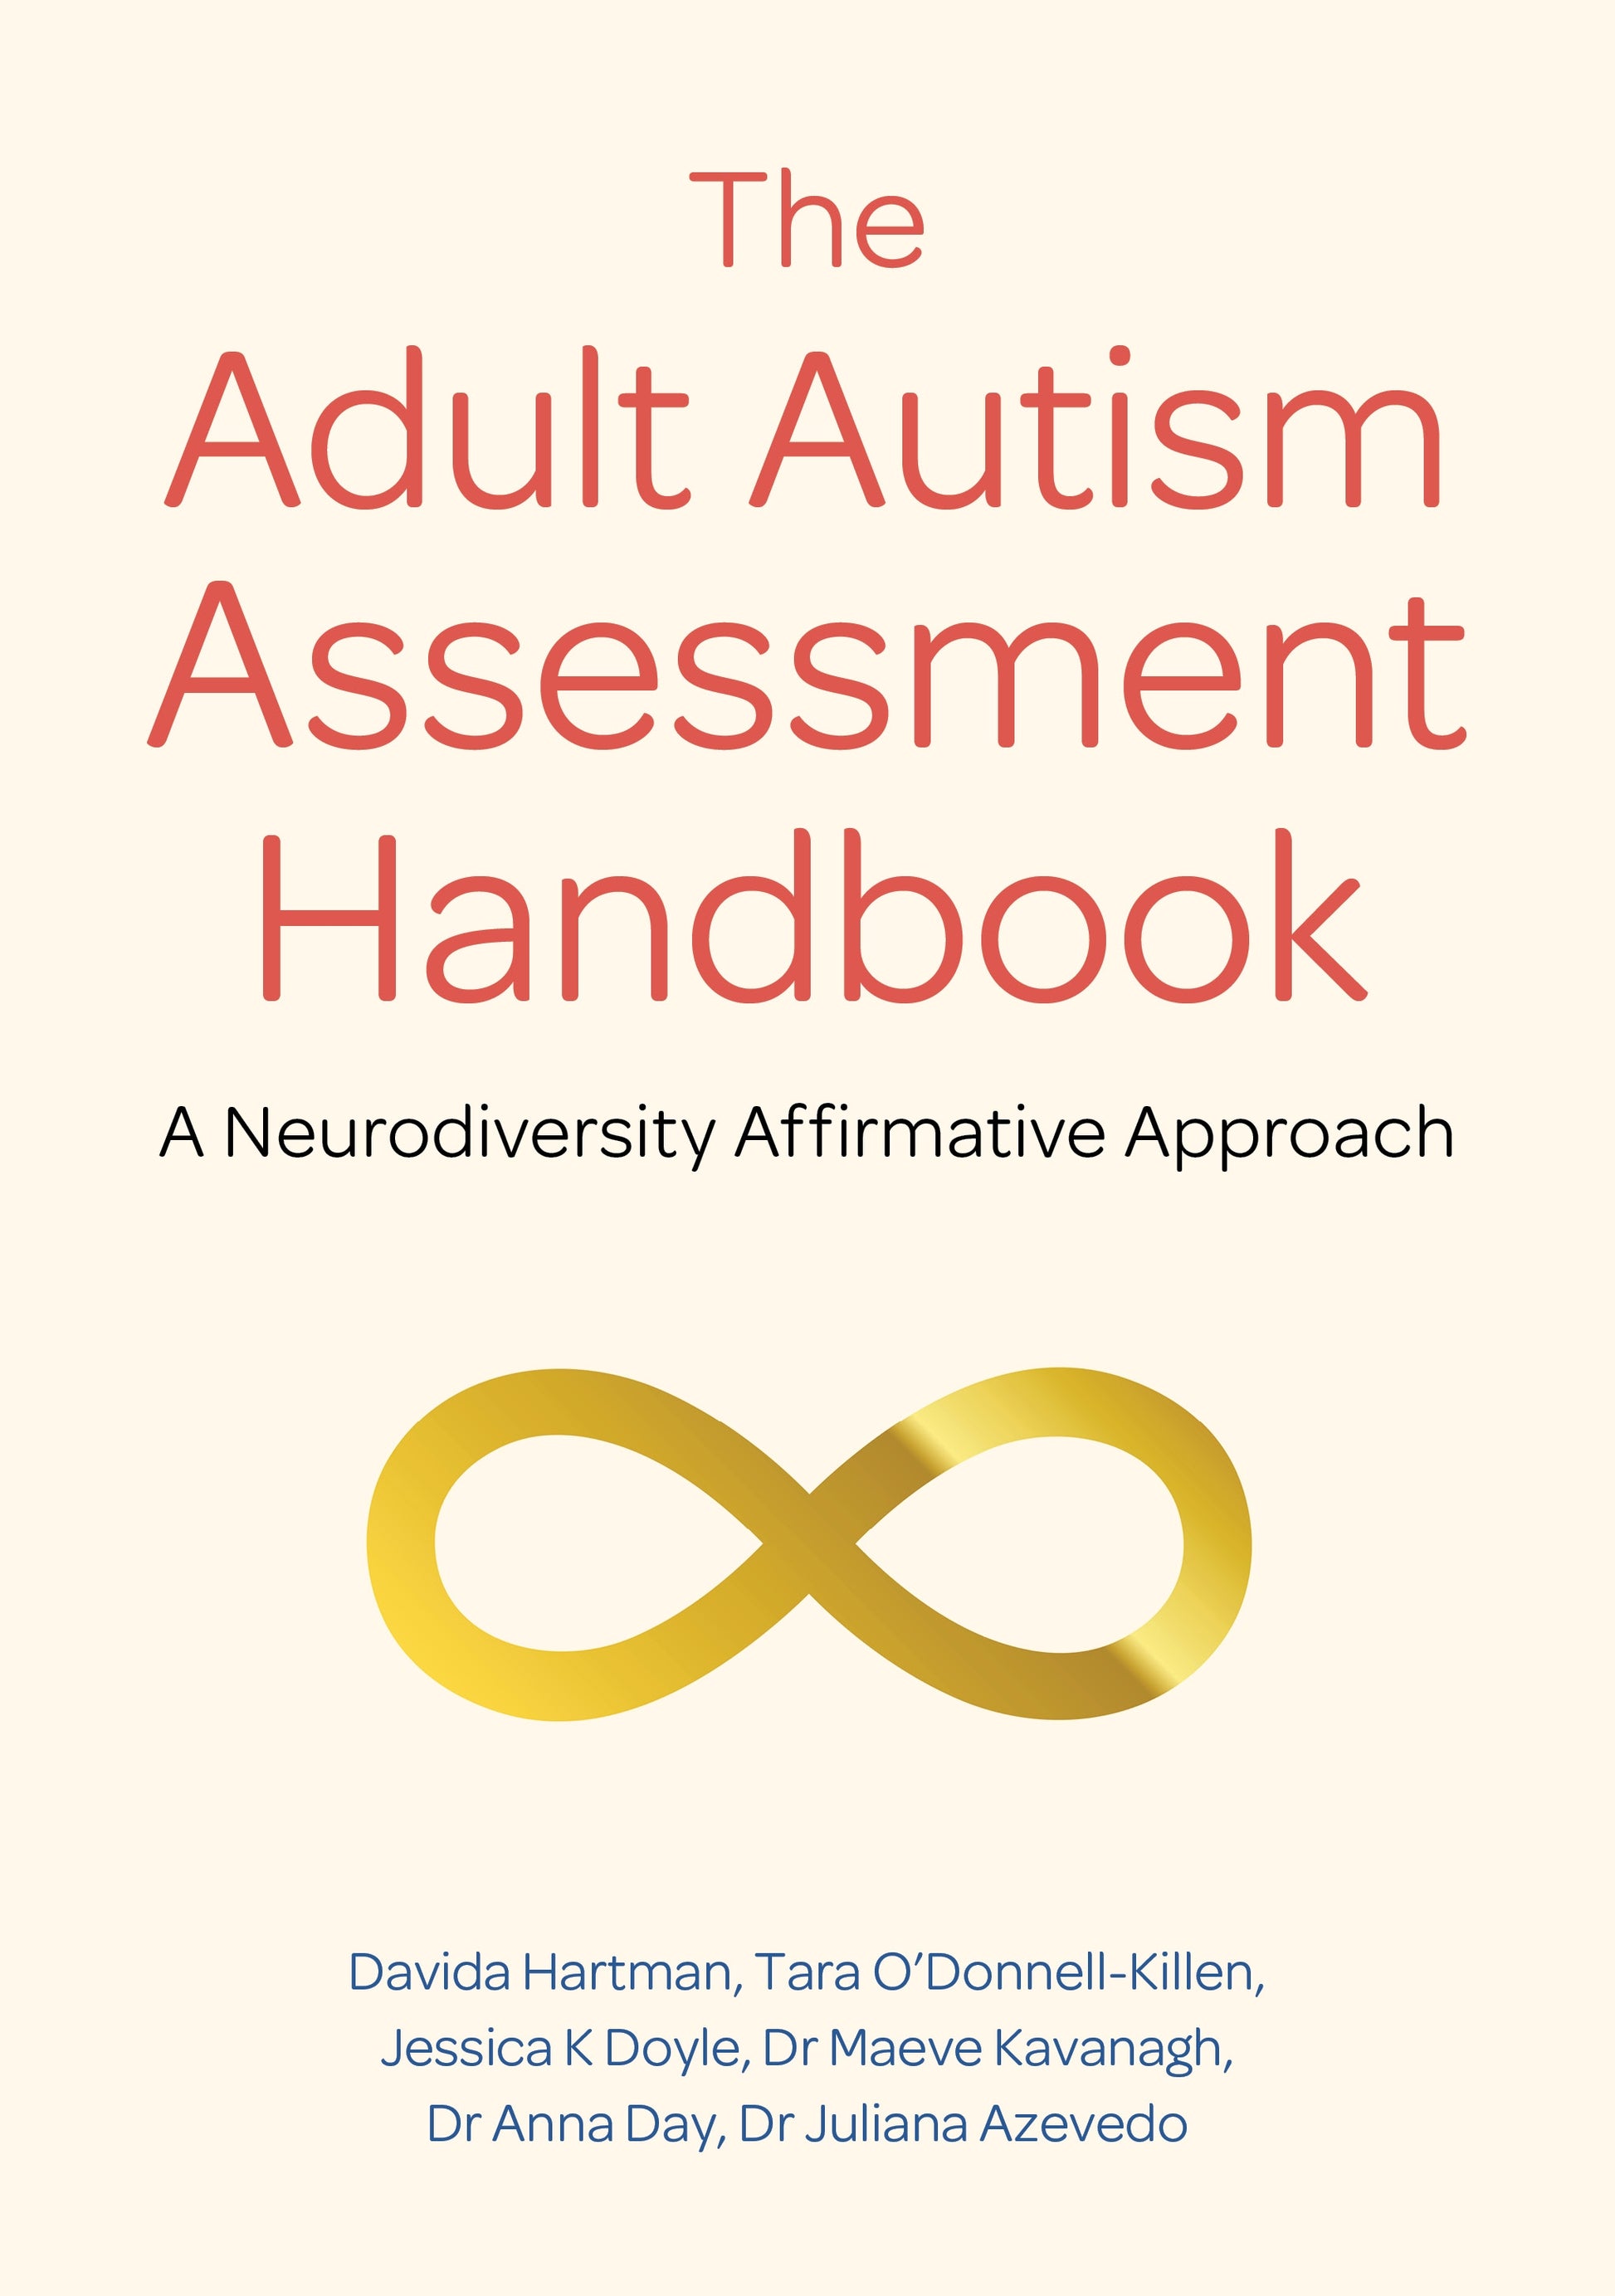 The Adult Autism Assessment Handbook by Davida Hartman, Dr Maeve Kavanagh, Dr Juliana Azevedo, Tara O'Donnell-Killen, Jessica K Doyle, Dr Anna Day